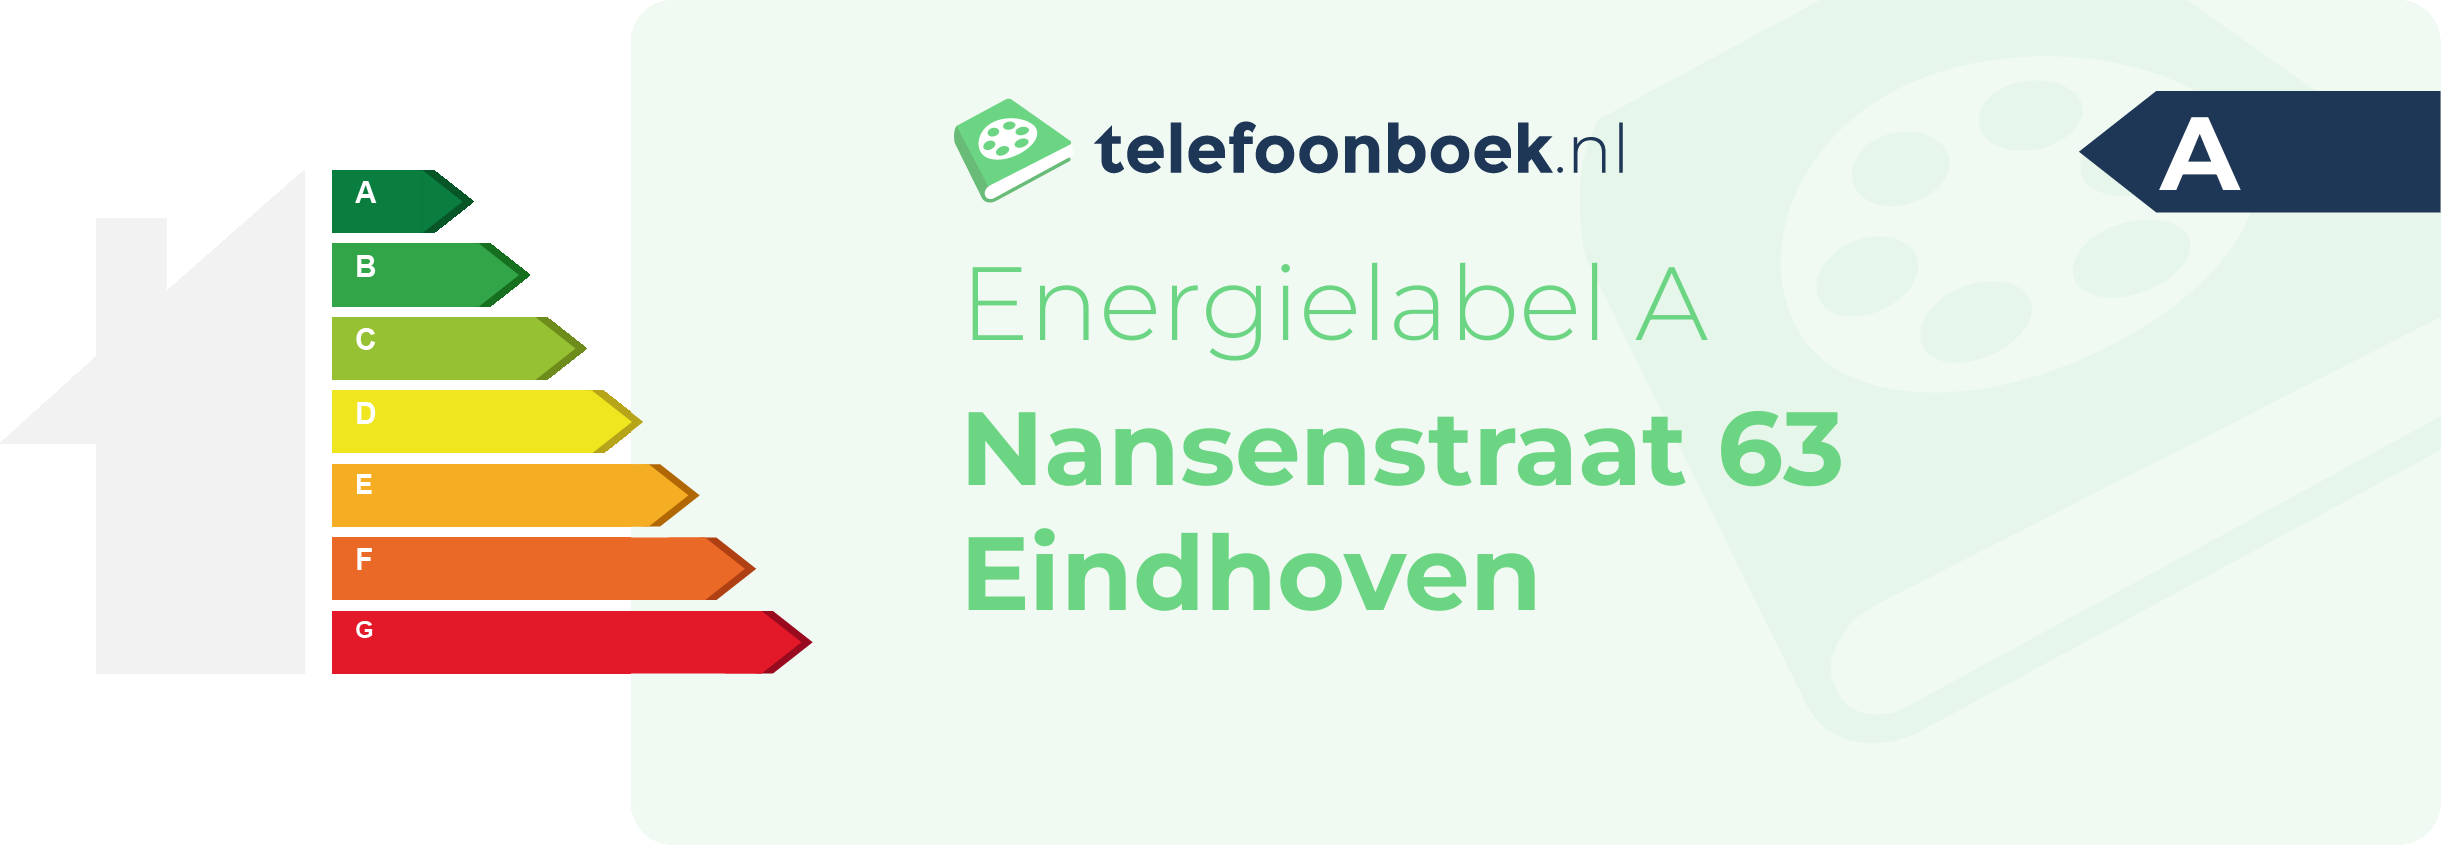 Energielabel Nansenstraat 63 Eindhoven